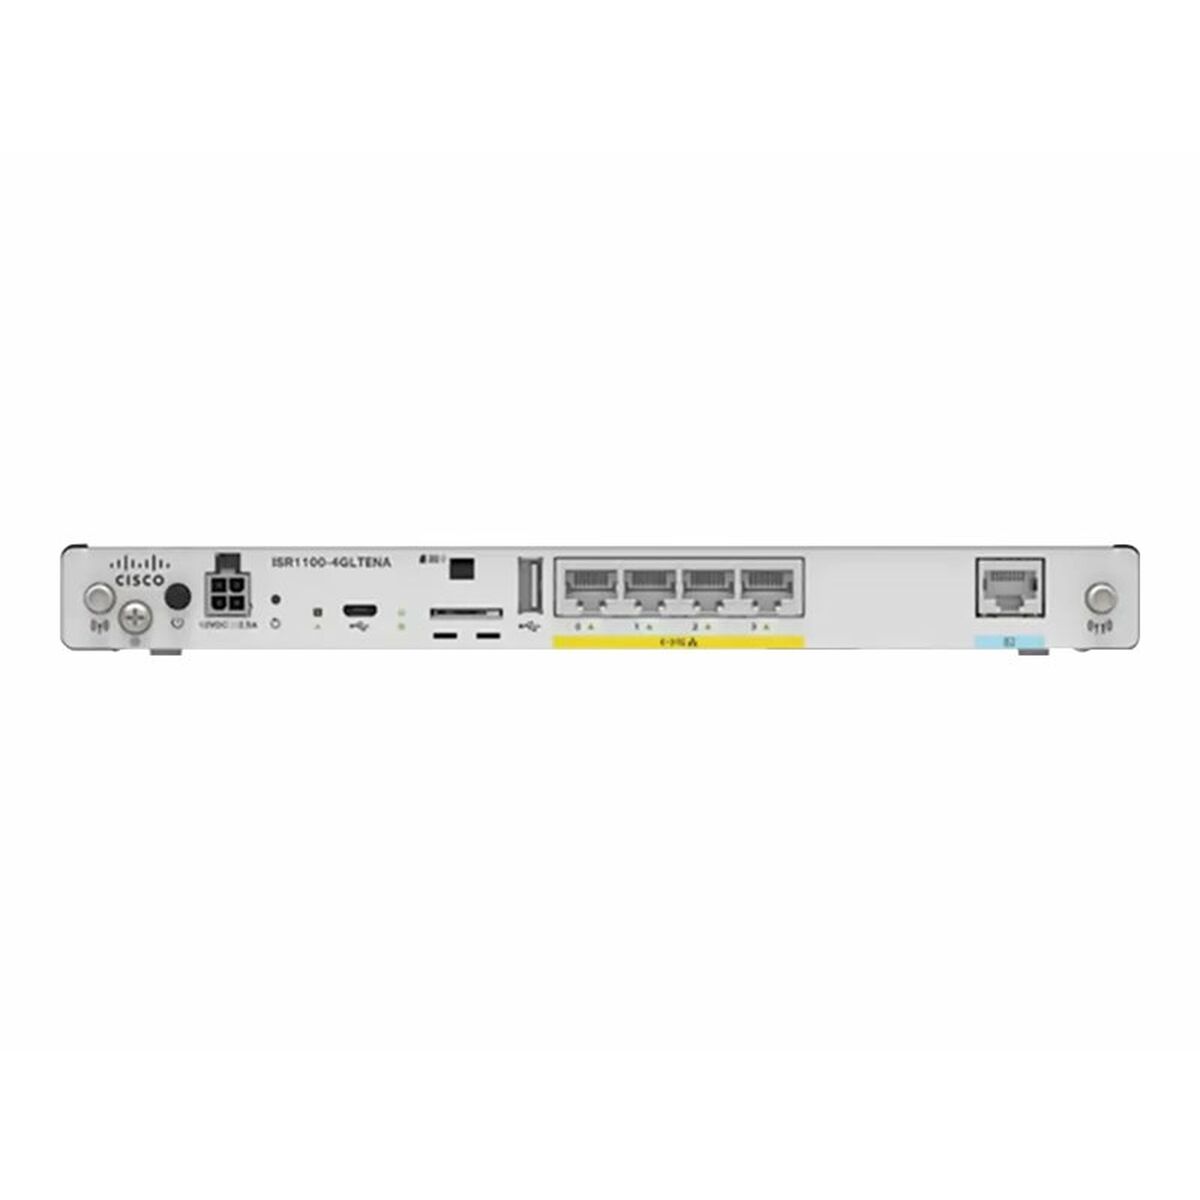 Router CISCO ISR1100-4G